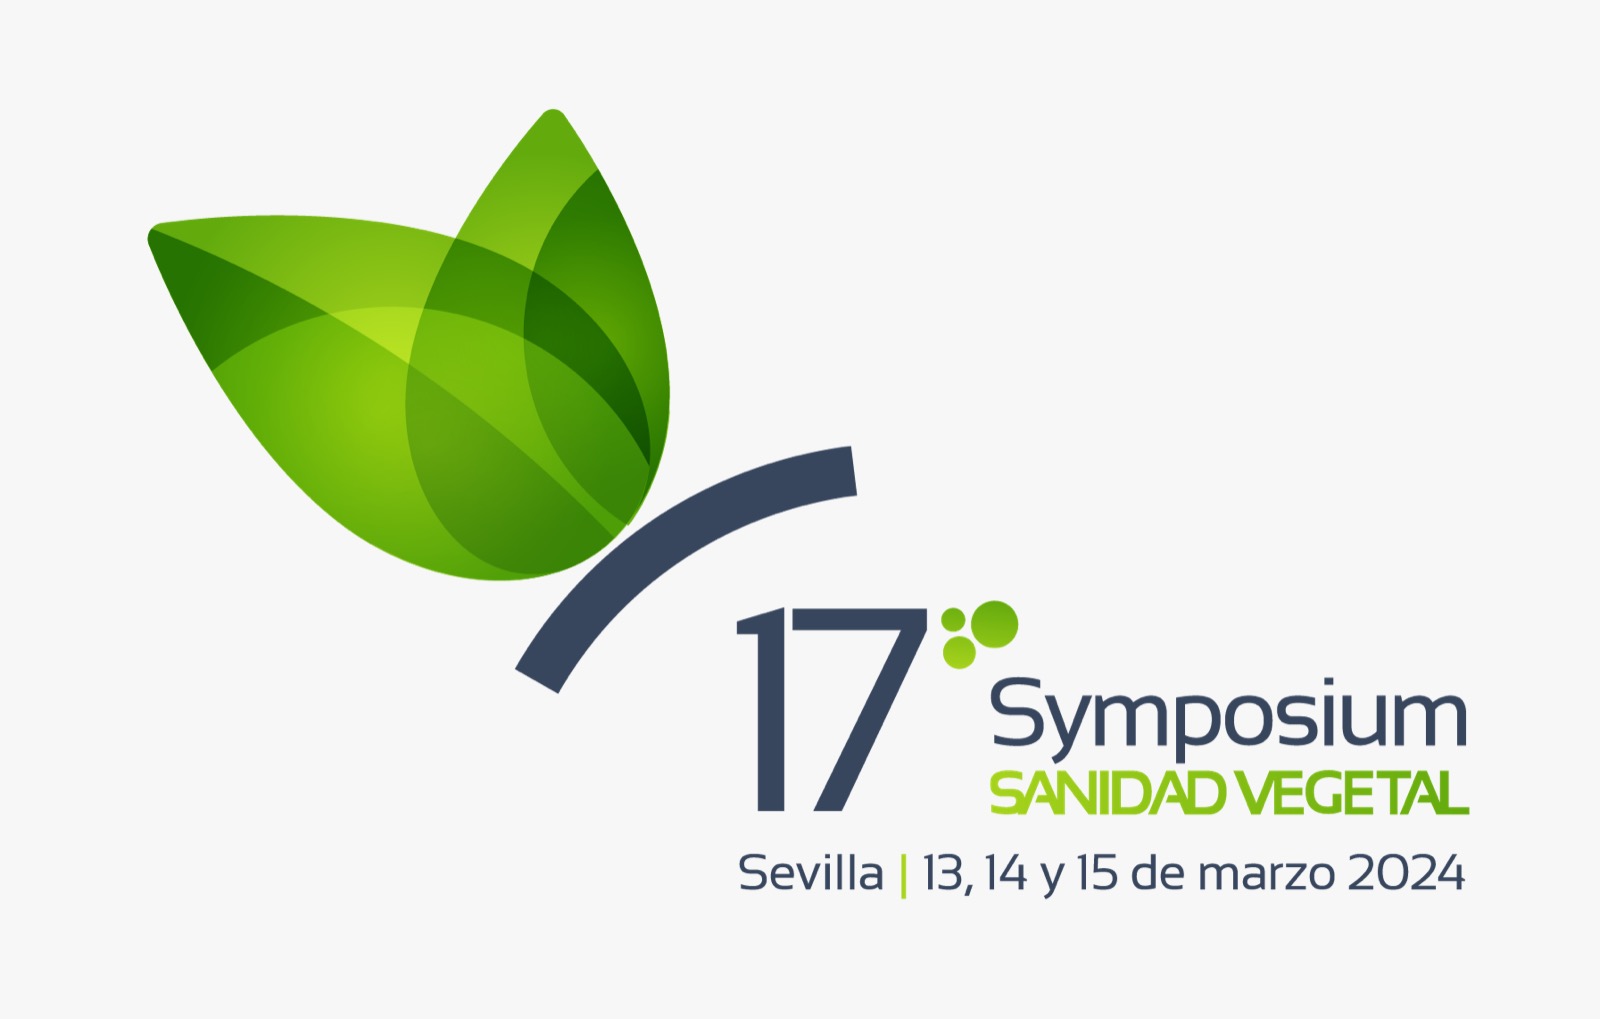 17º Symposium, Sanidad Vegetal 2024